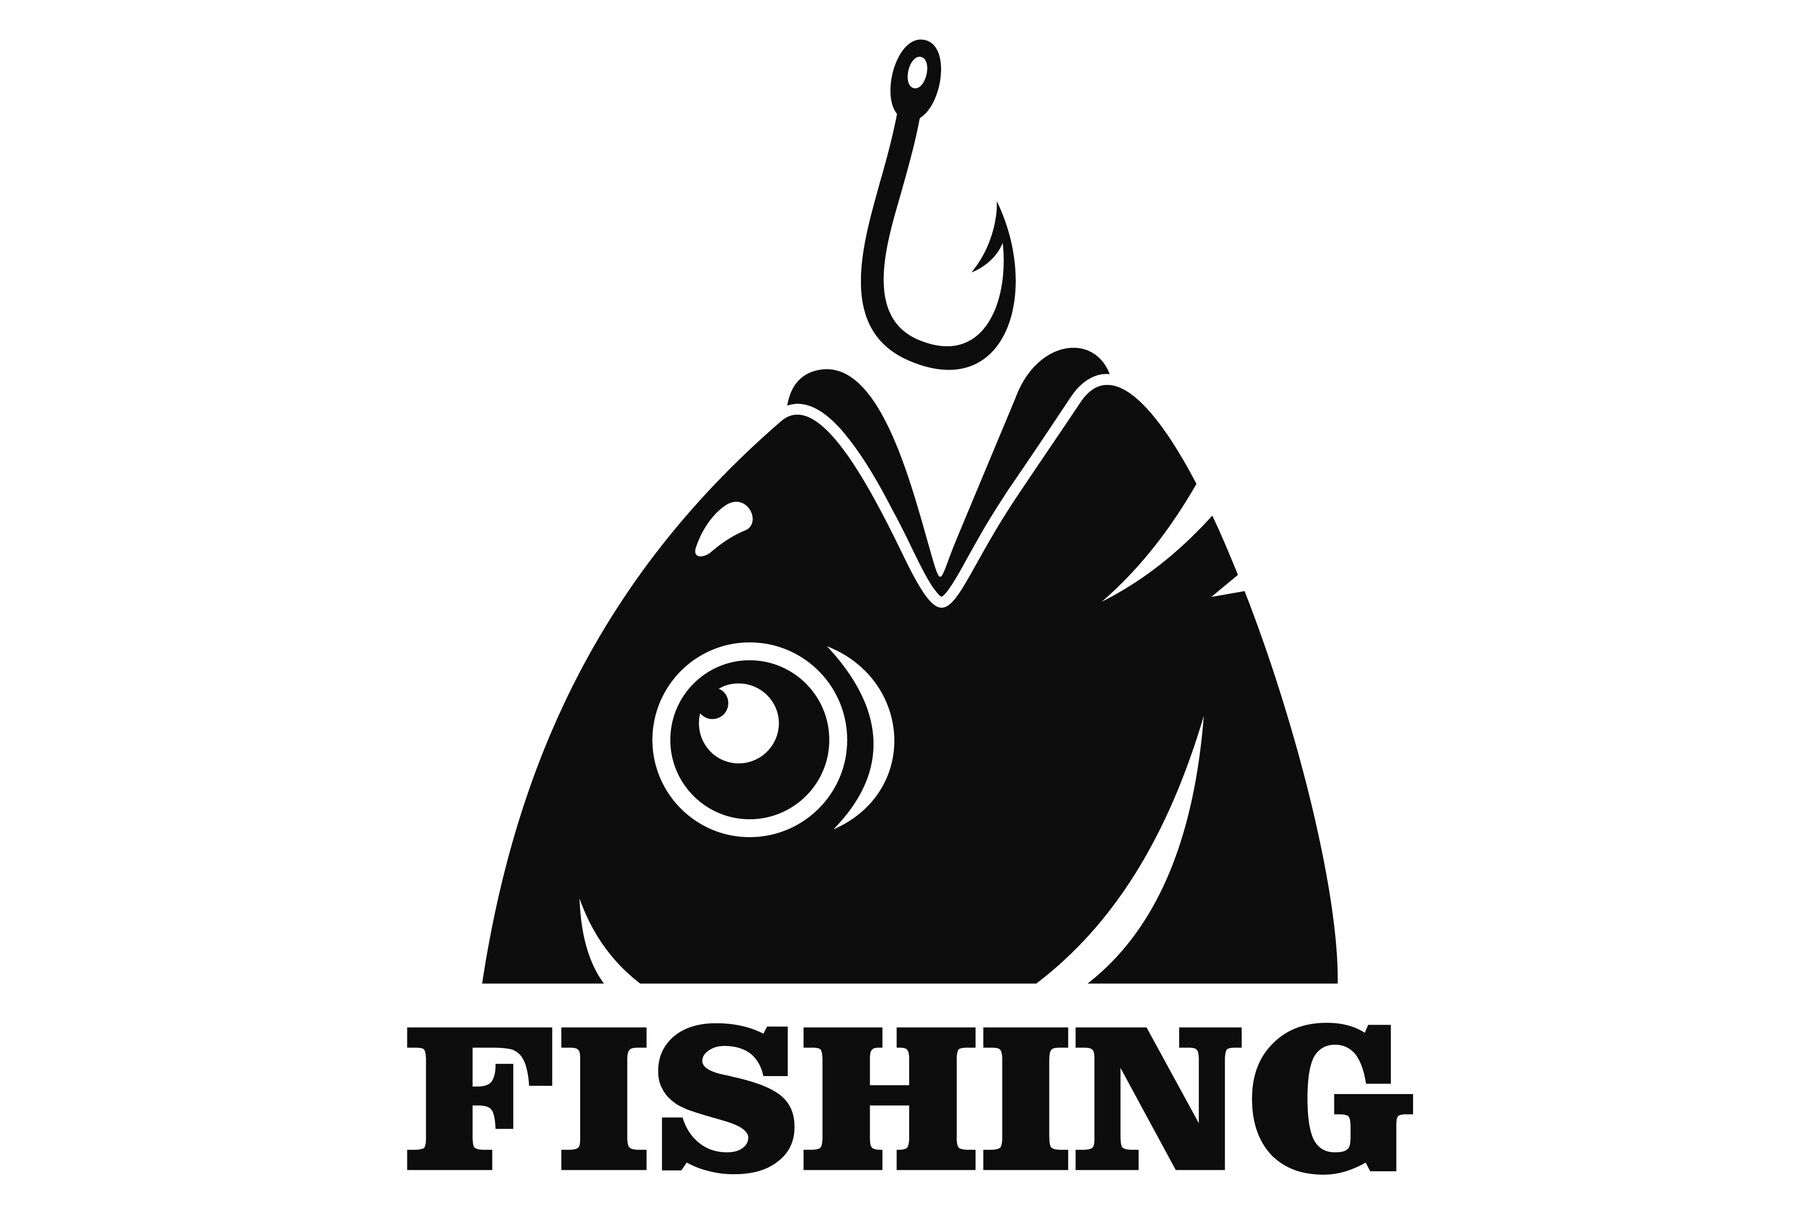 Fish hook logo, simple style By Anatolir56